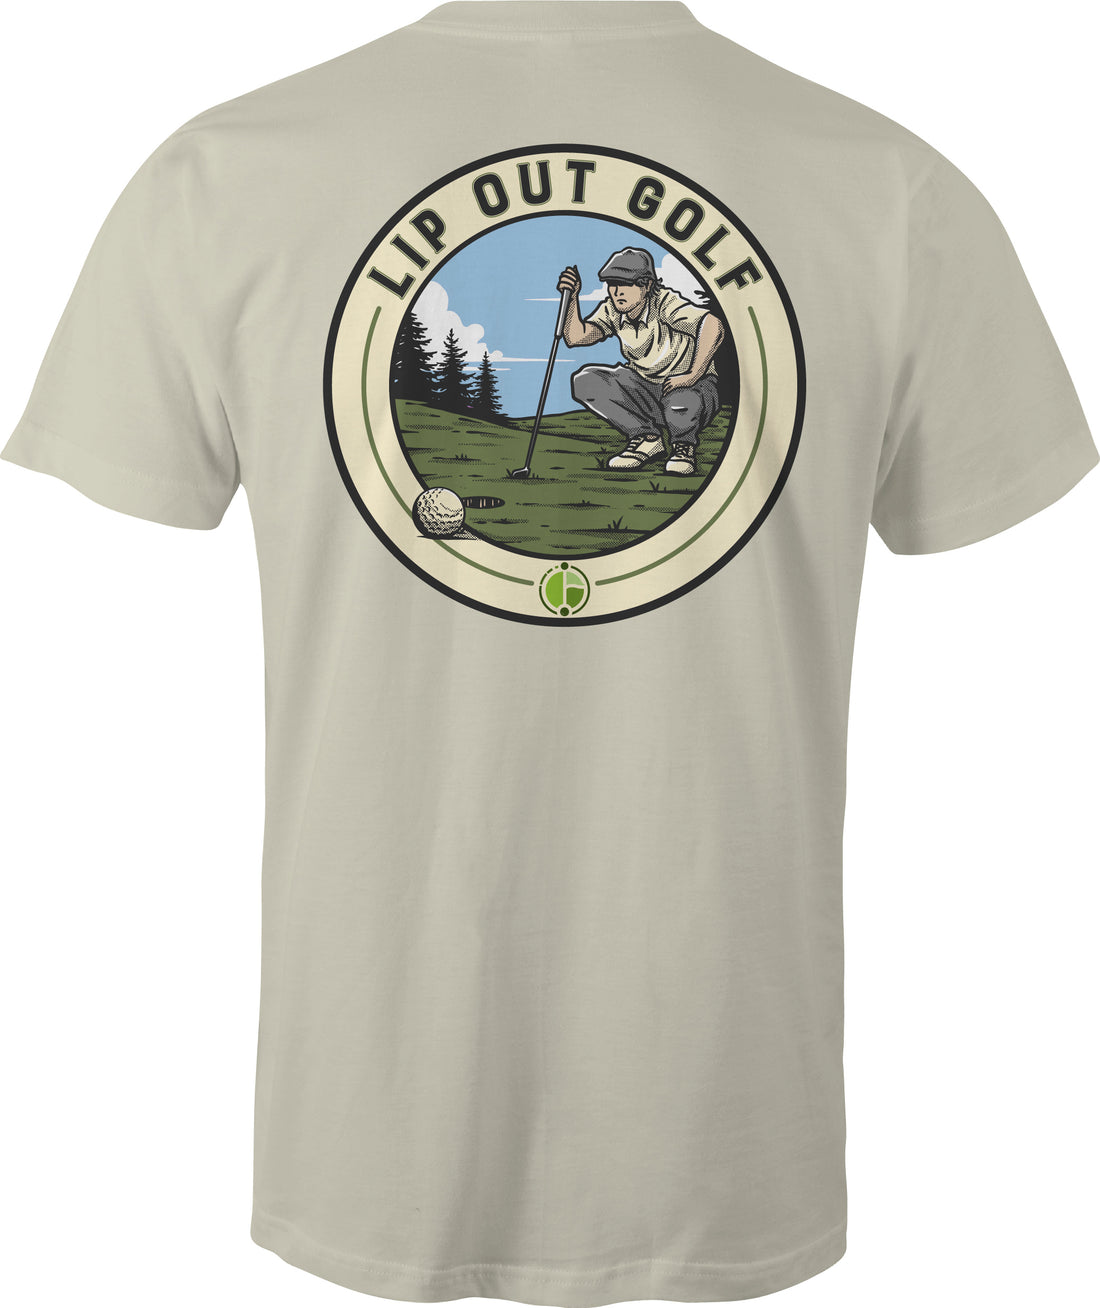 Lip Out Golf Vintage T-shirt